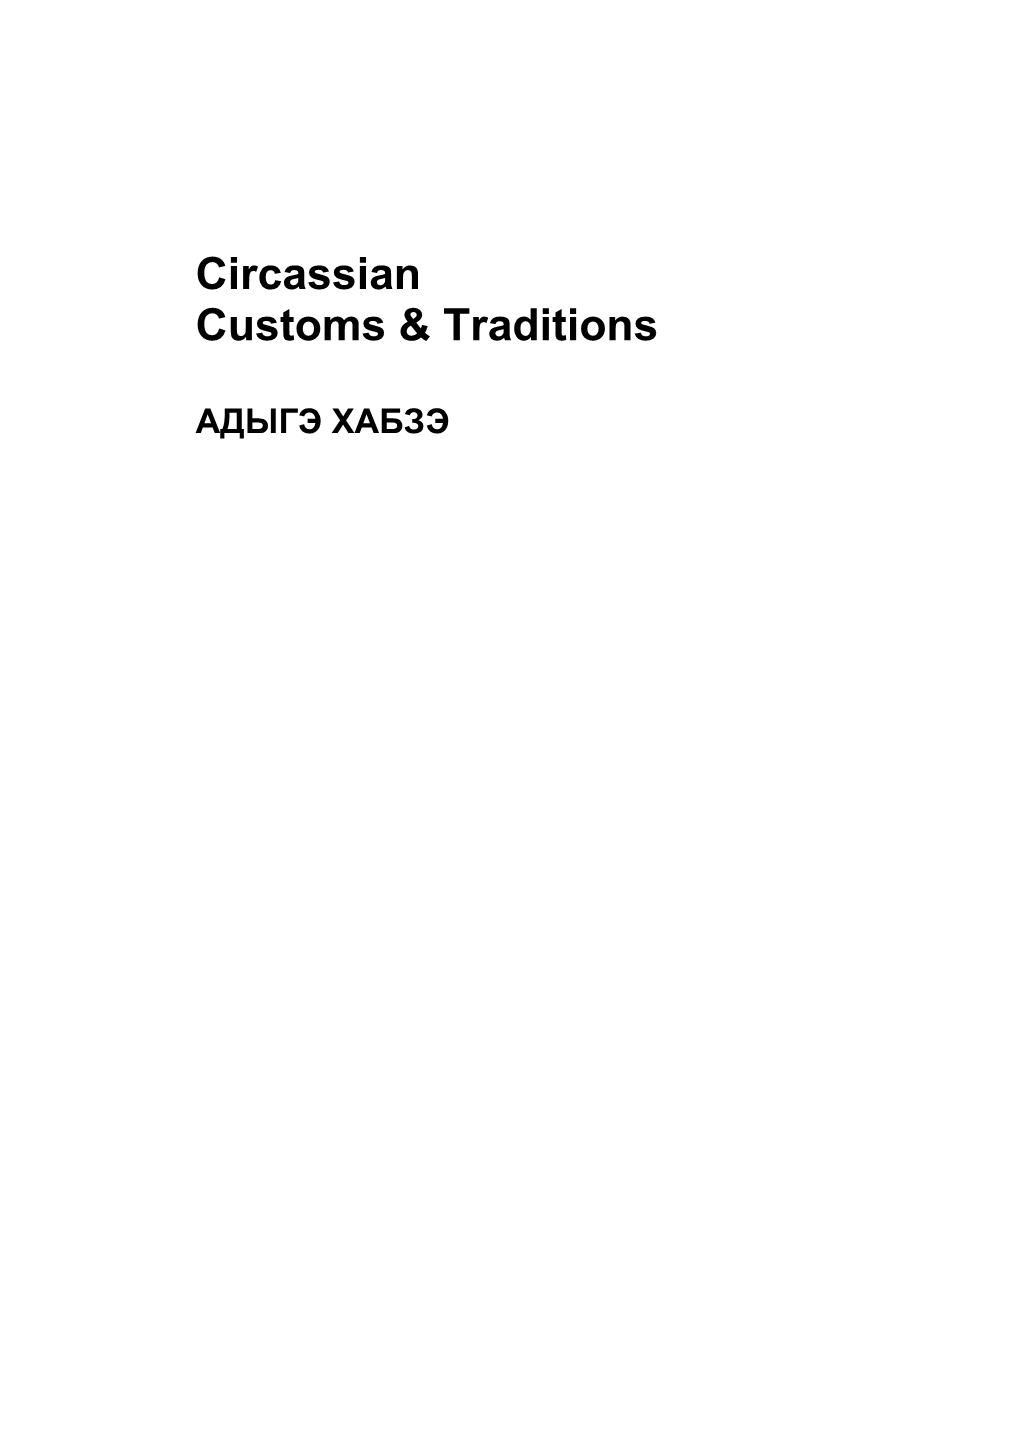 Circassian Customs & Traditions